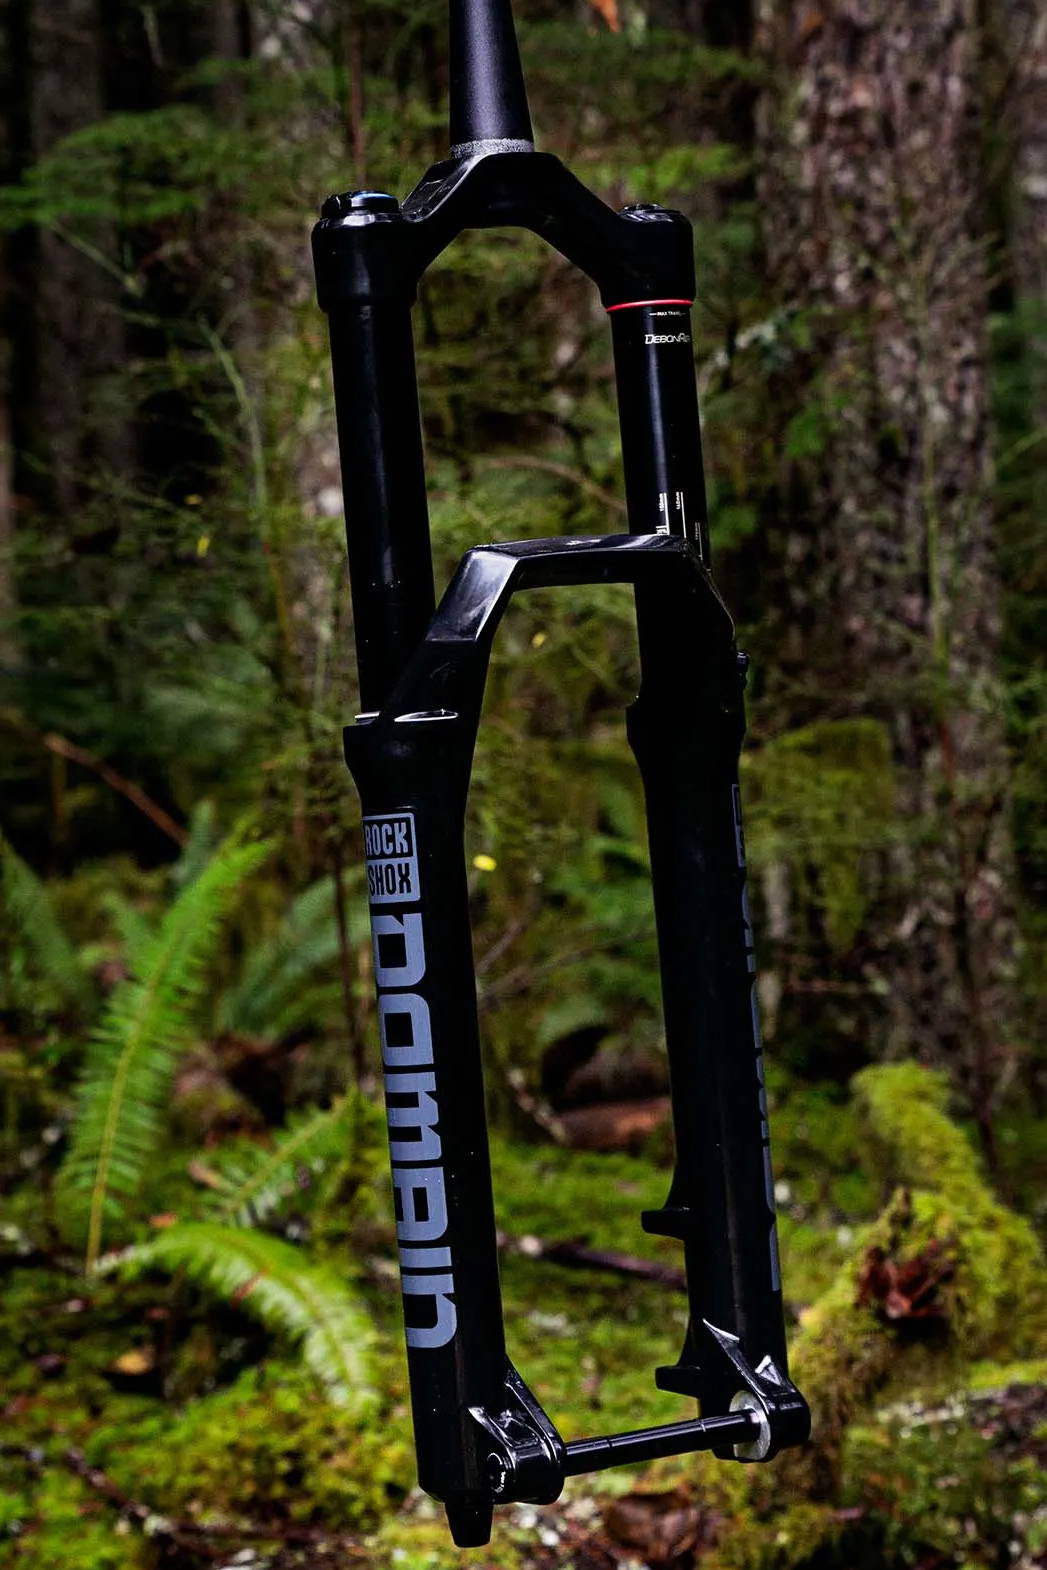 rockshox domain mountain bike fork floating in a forest